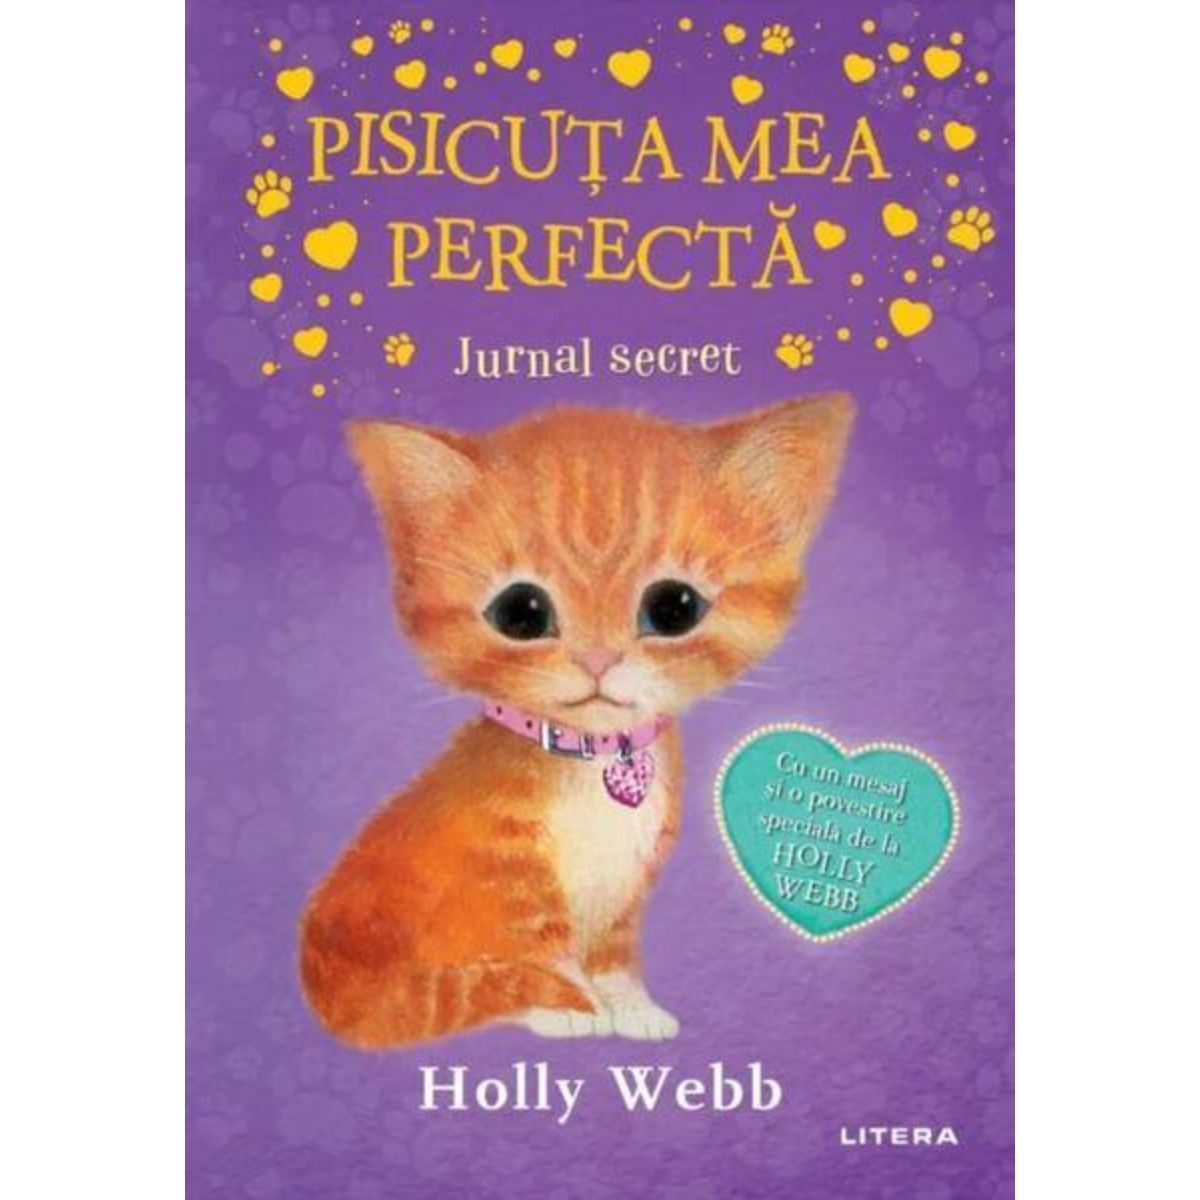 Pisicuta mea perfecta, Jurnal secret, Holly Webb carti